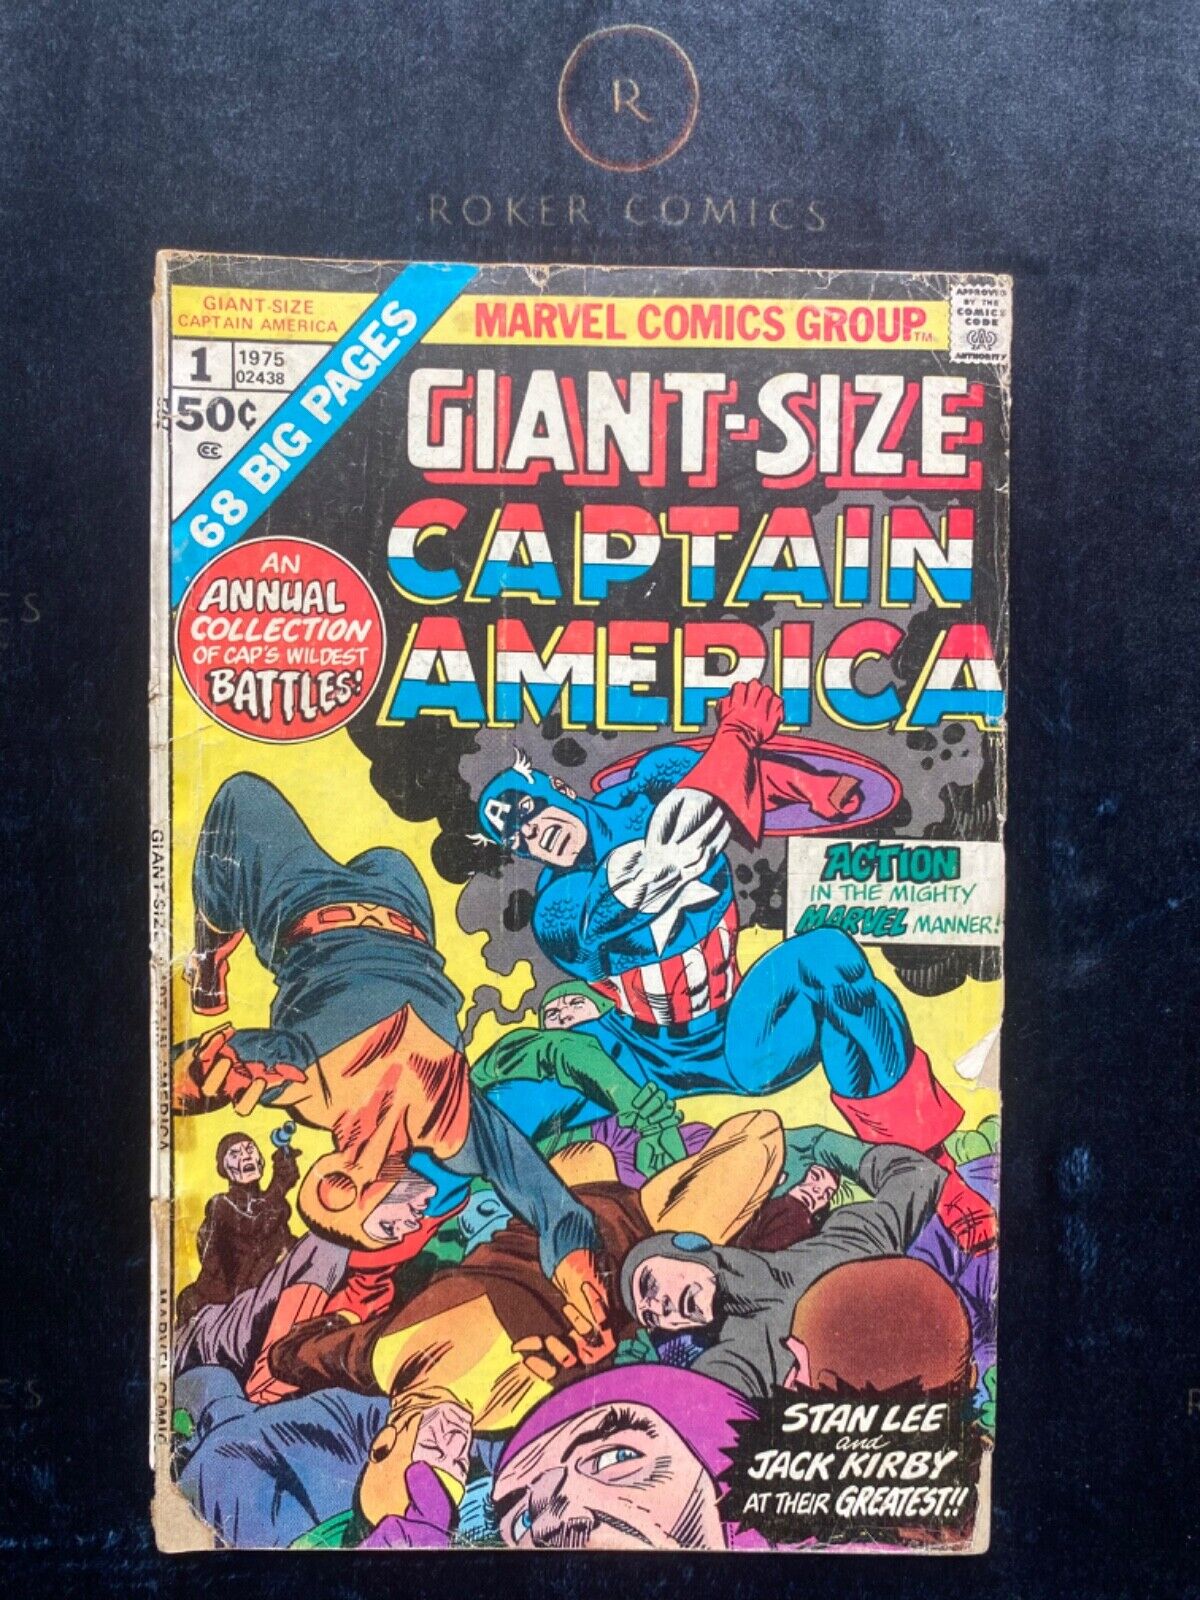 RARE 1974 Giant-Size Captain America #1